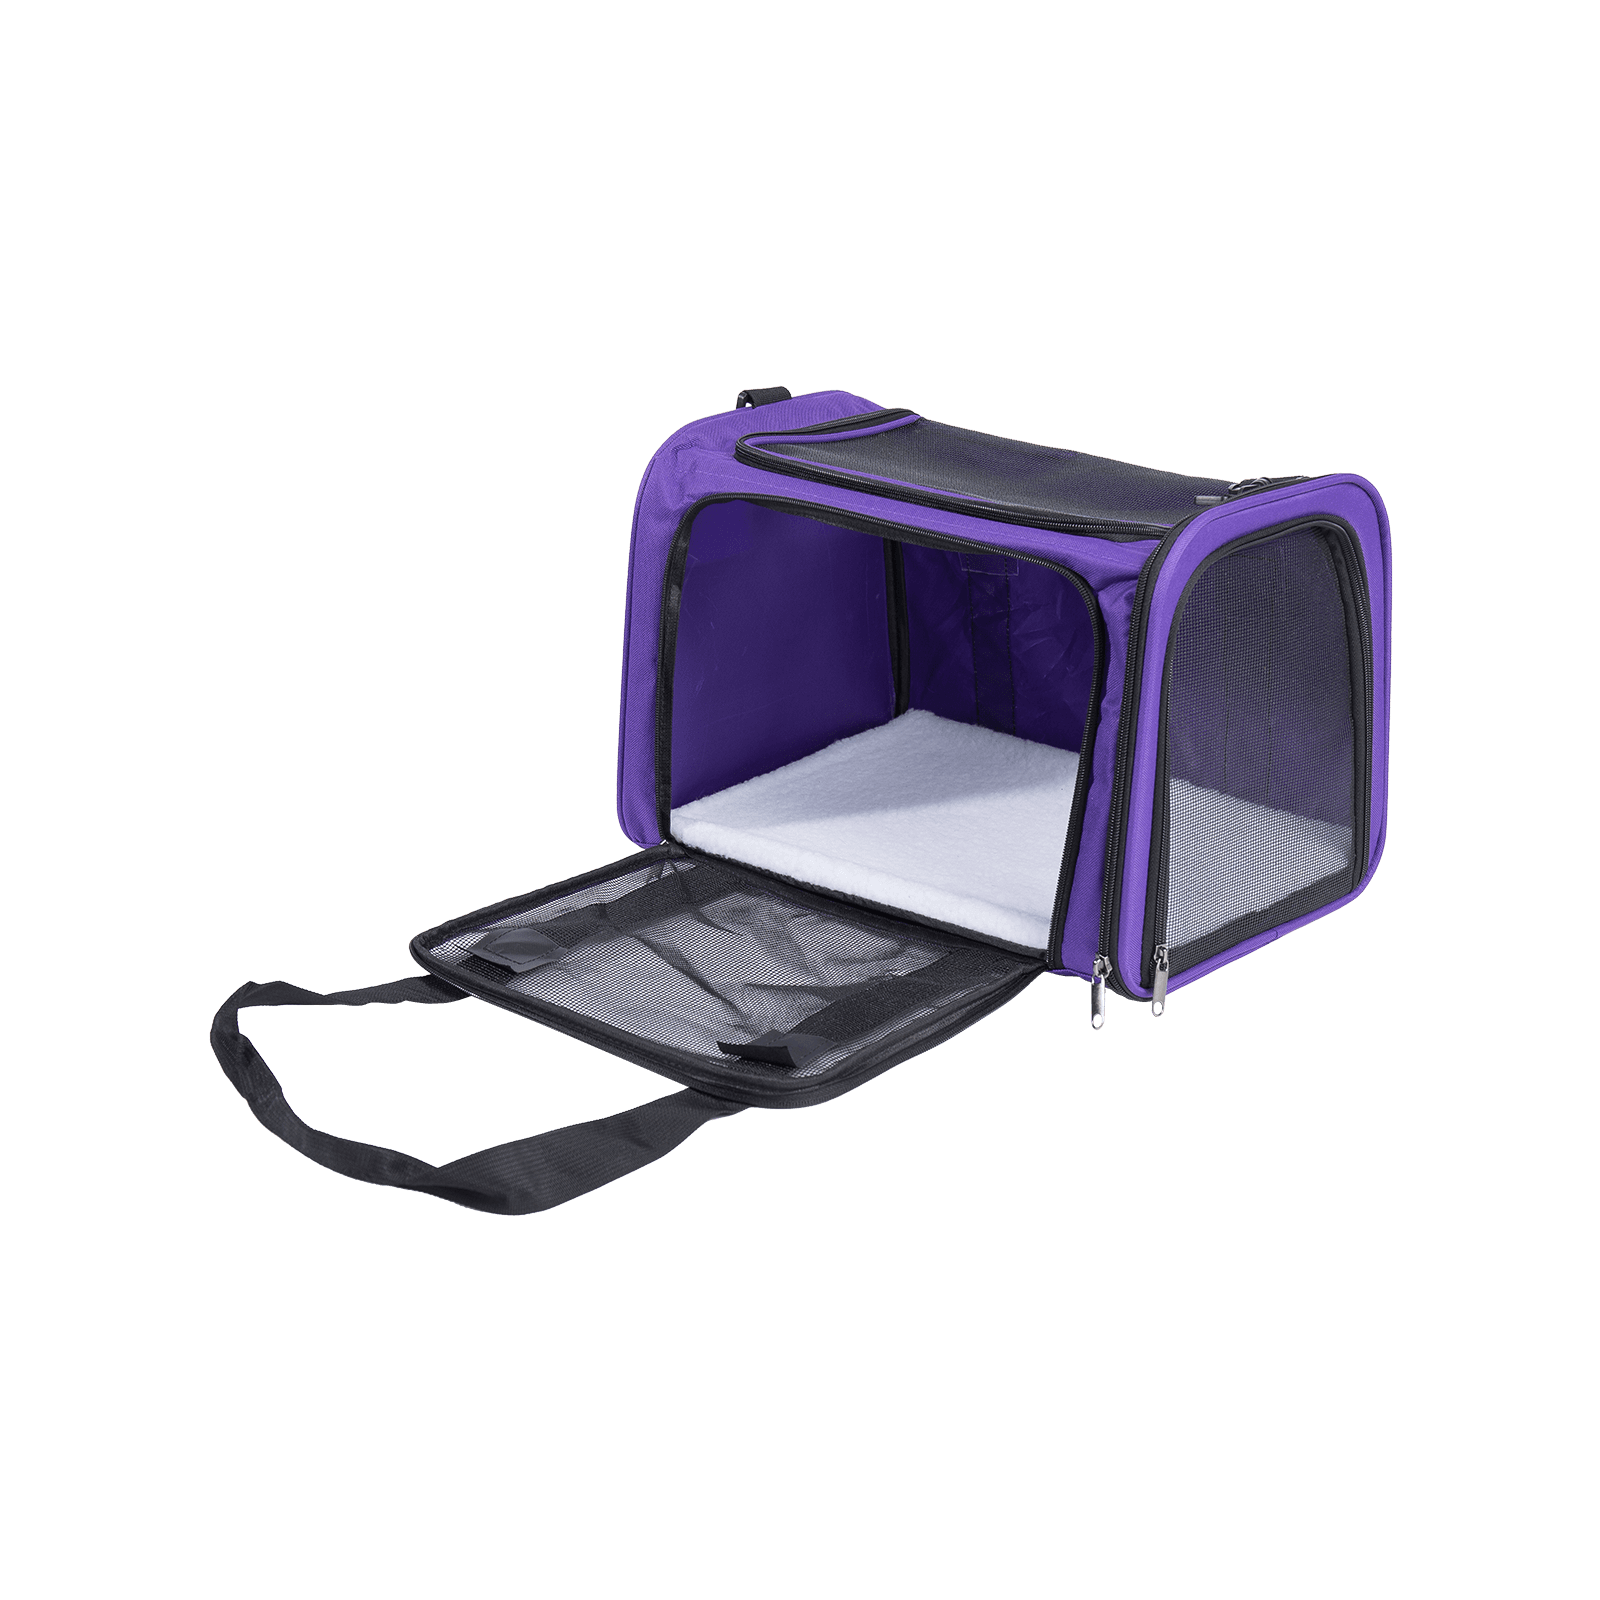 Multi-functional pet carrier bags